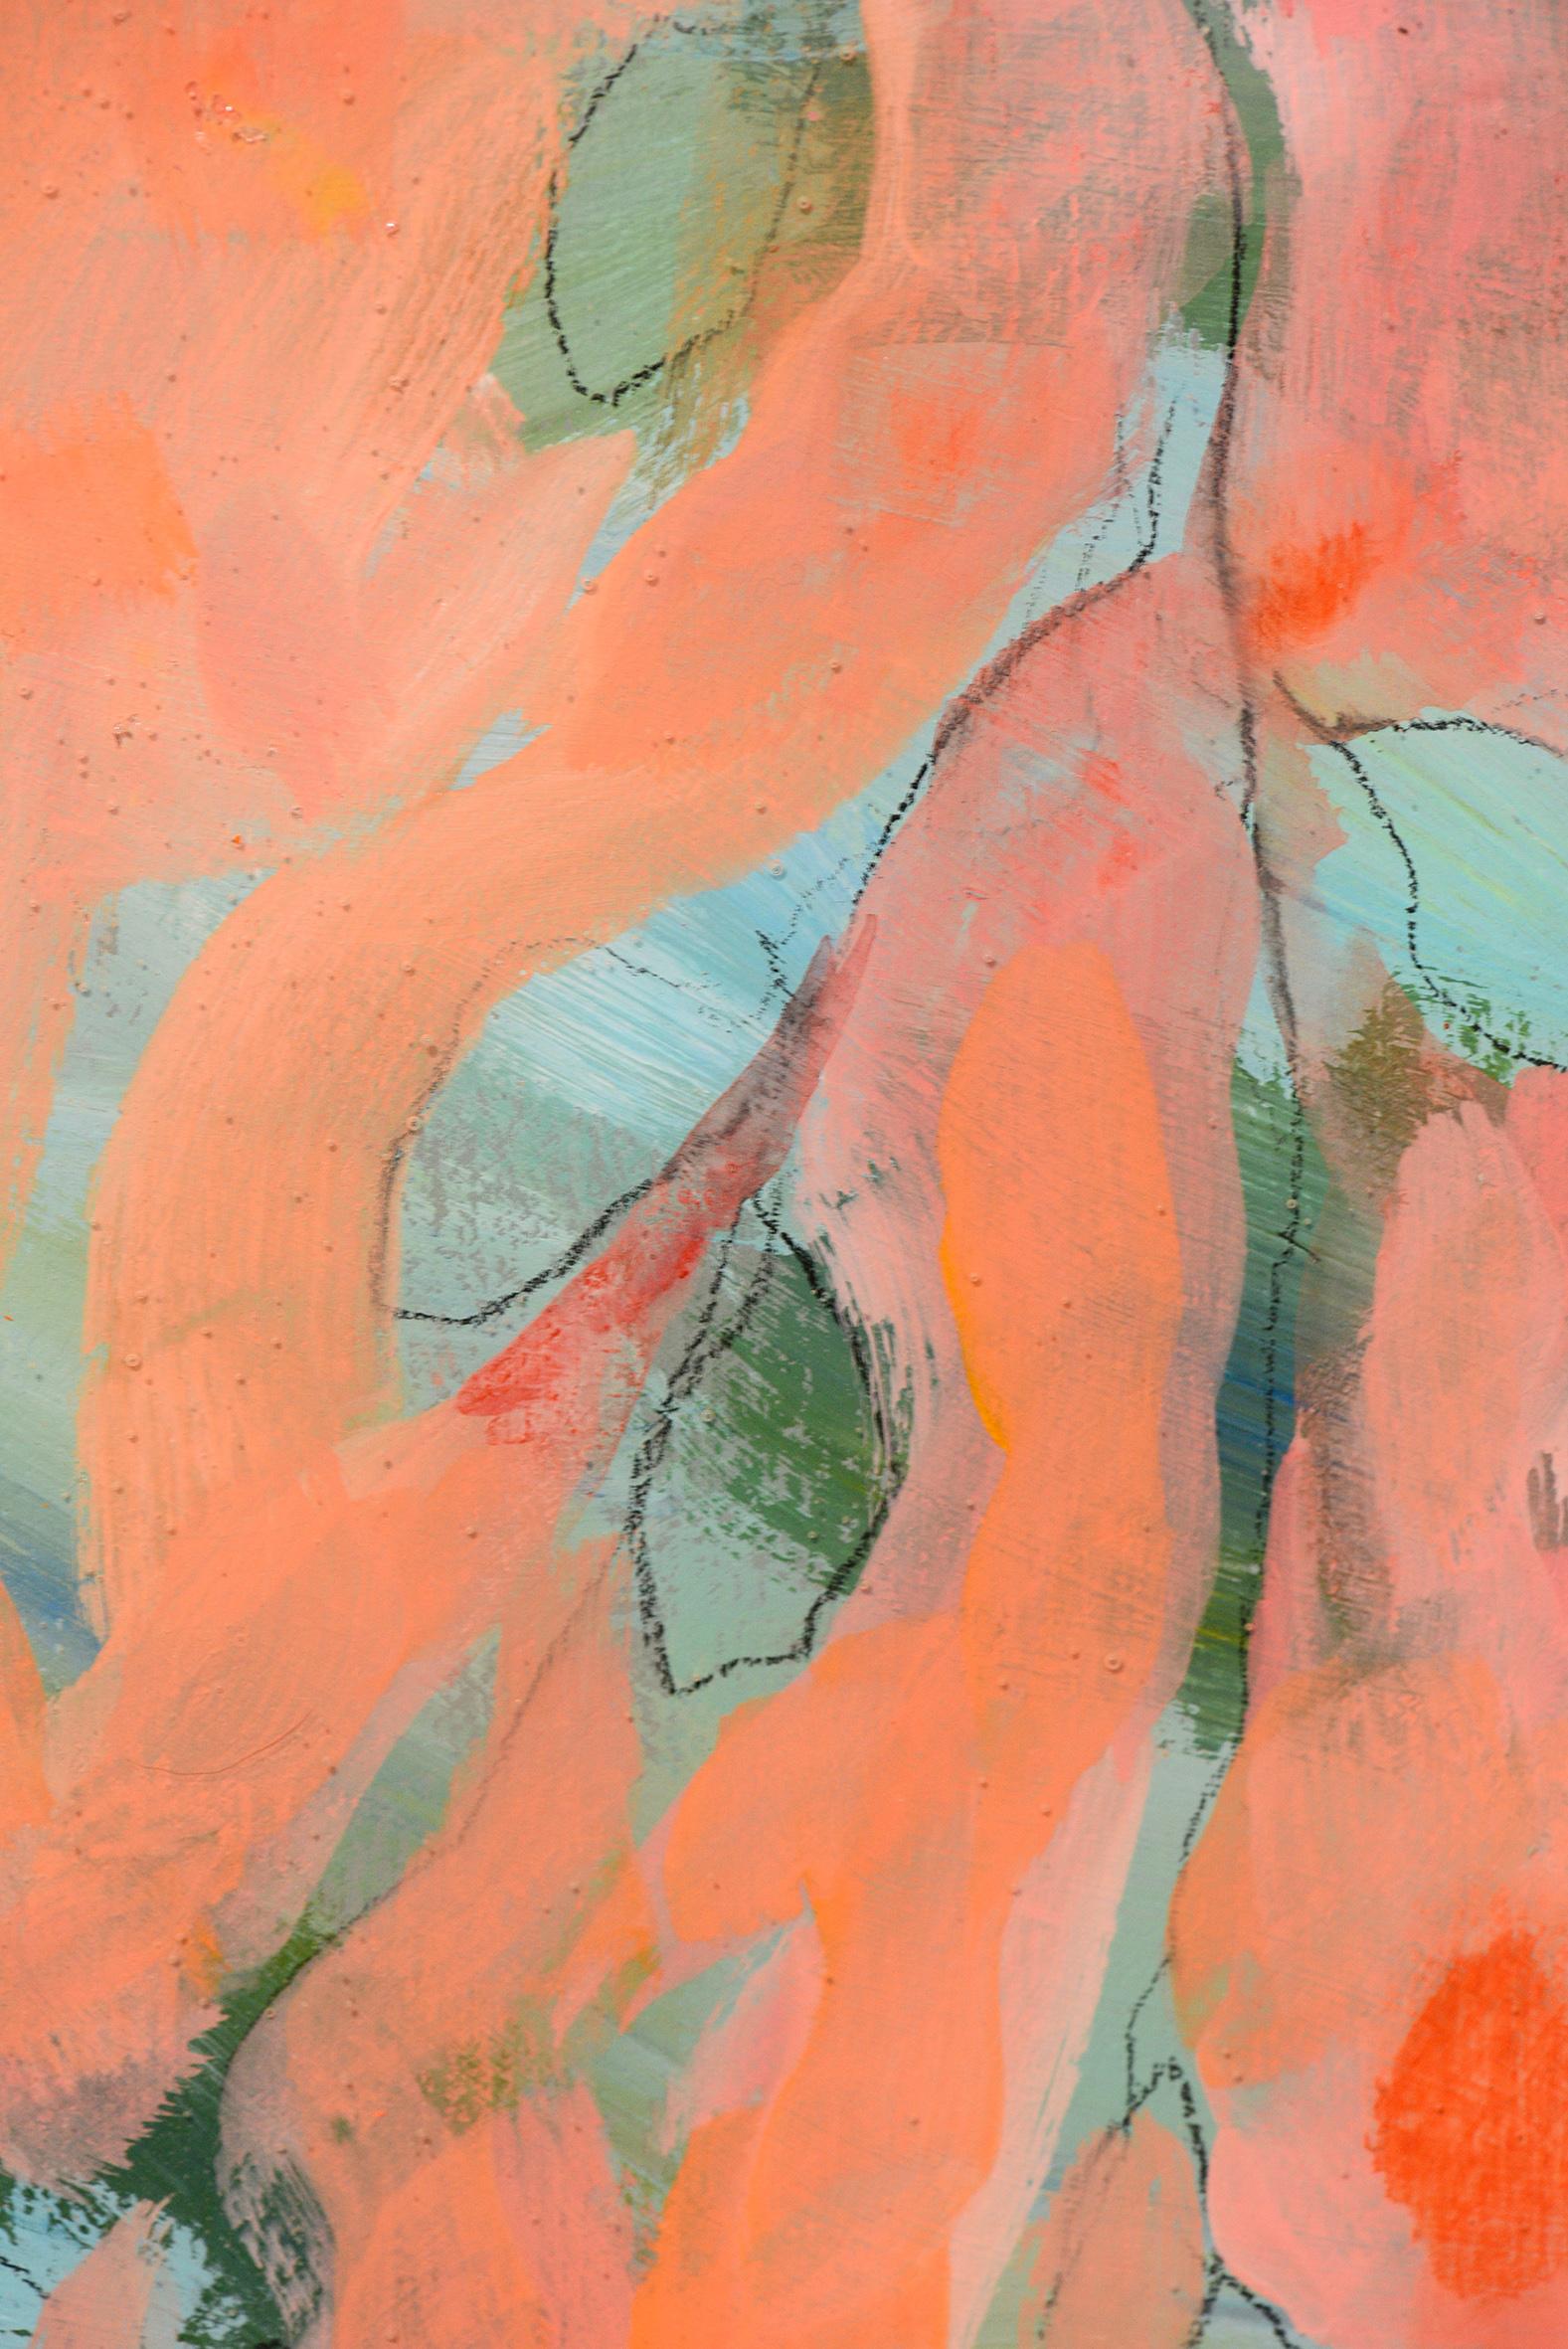 Astwerk 443 - Minimalist, Acrylic, Resin on Wood, 21st Century, Floral Painting - Orange Abstract Painting by Joanna Skurska